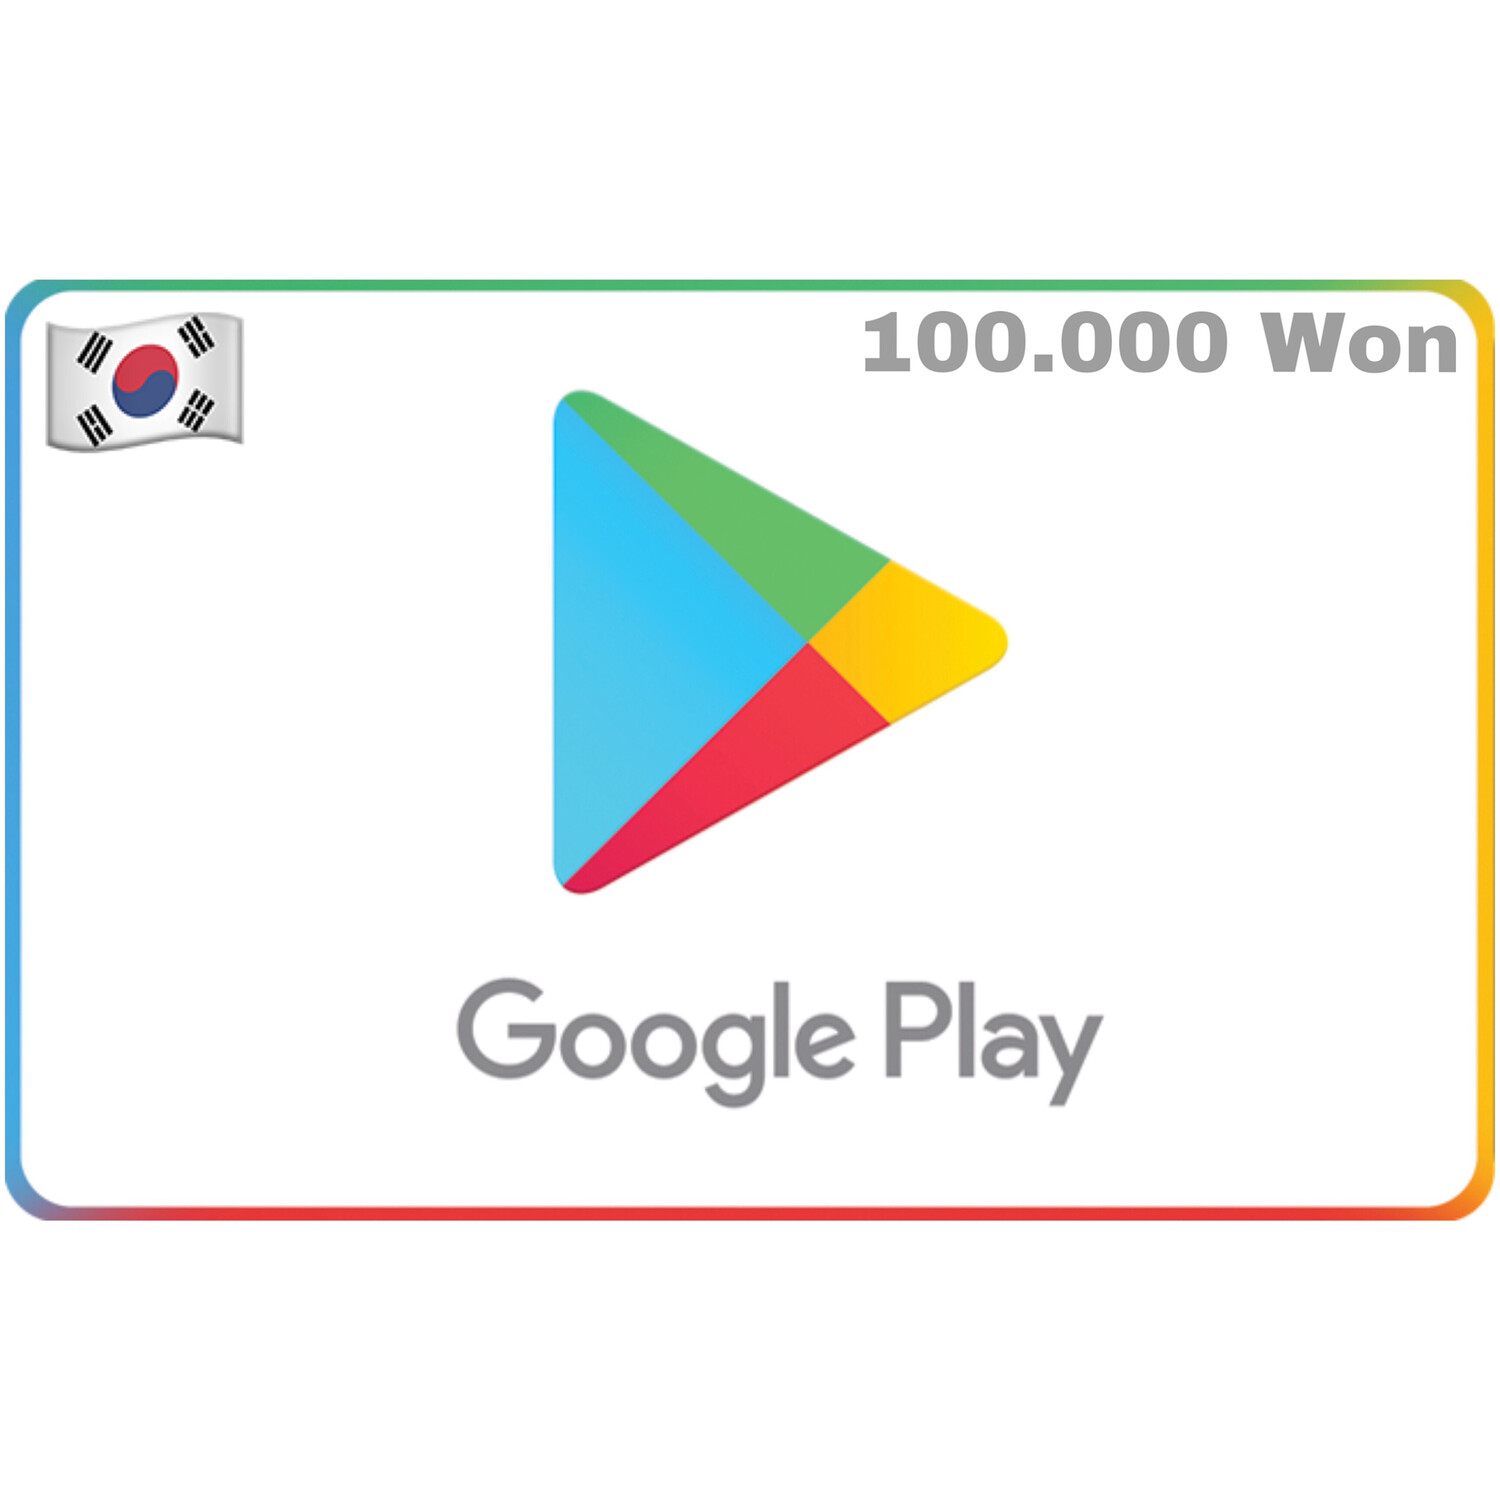 Google Play Korea 100,000 Won